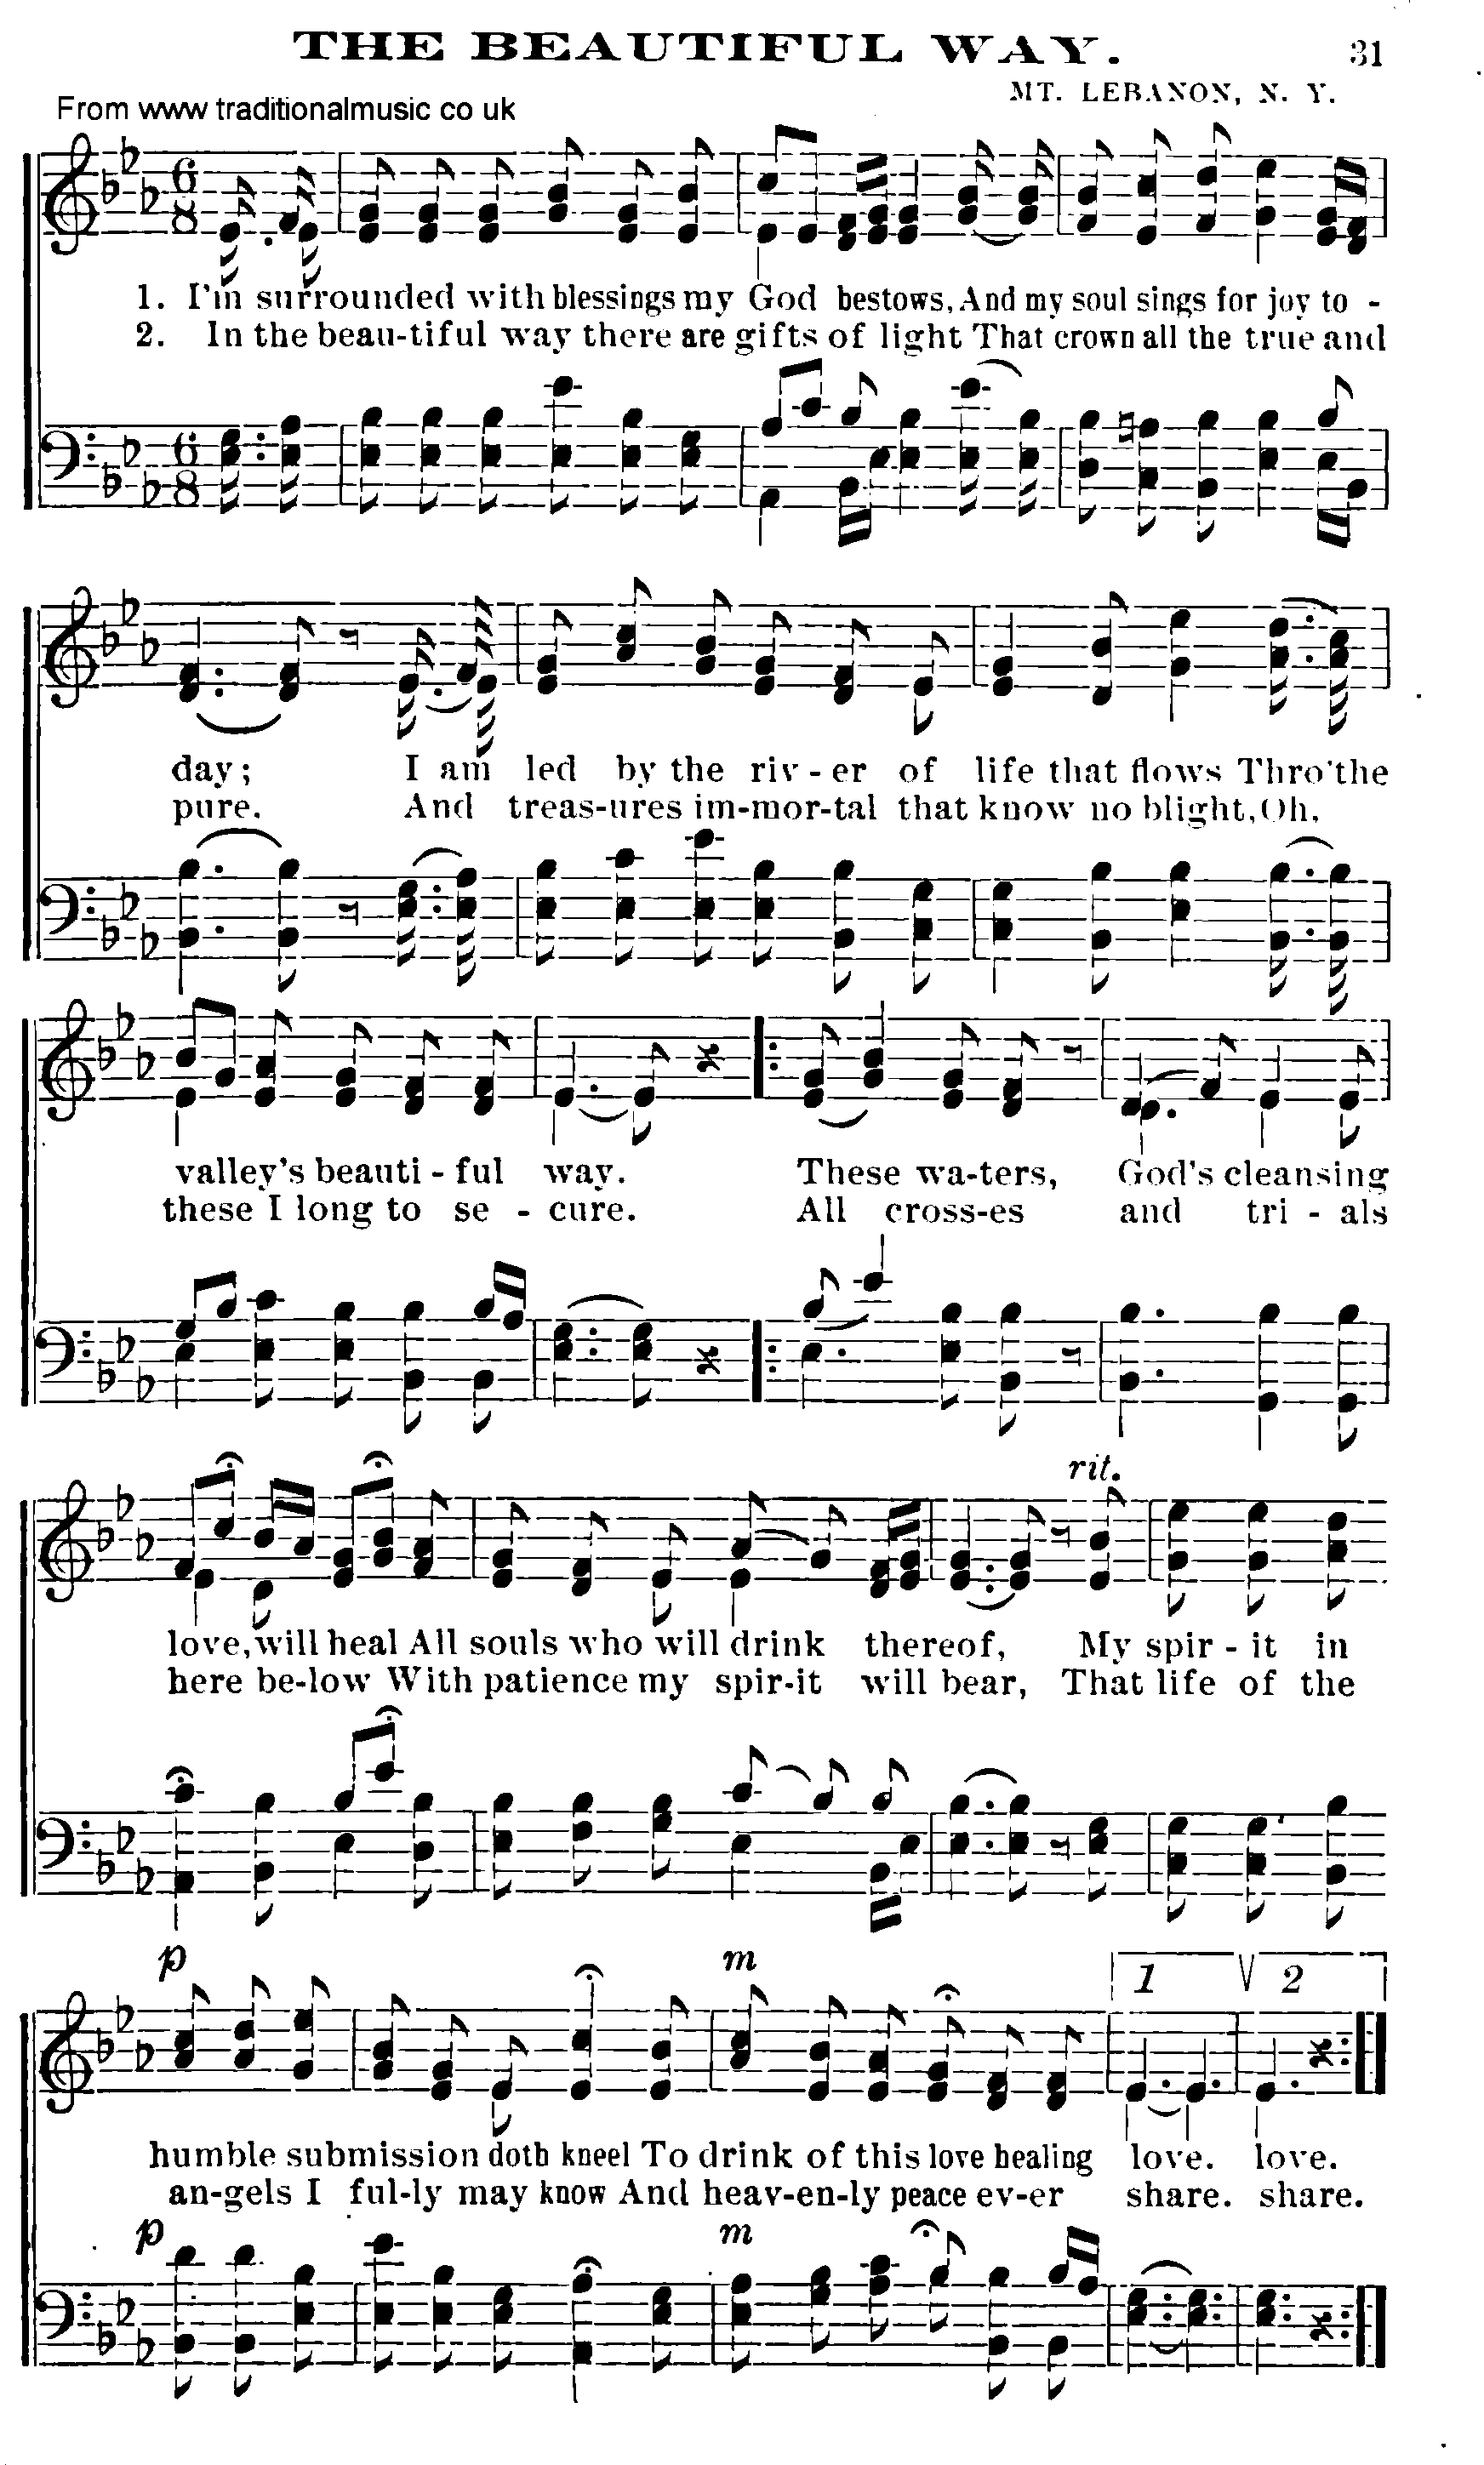 Shaker Music collection, Hymn: the beautiful way, sheetmusic and PDF